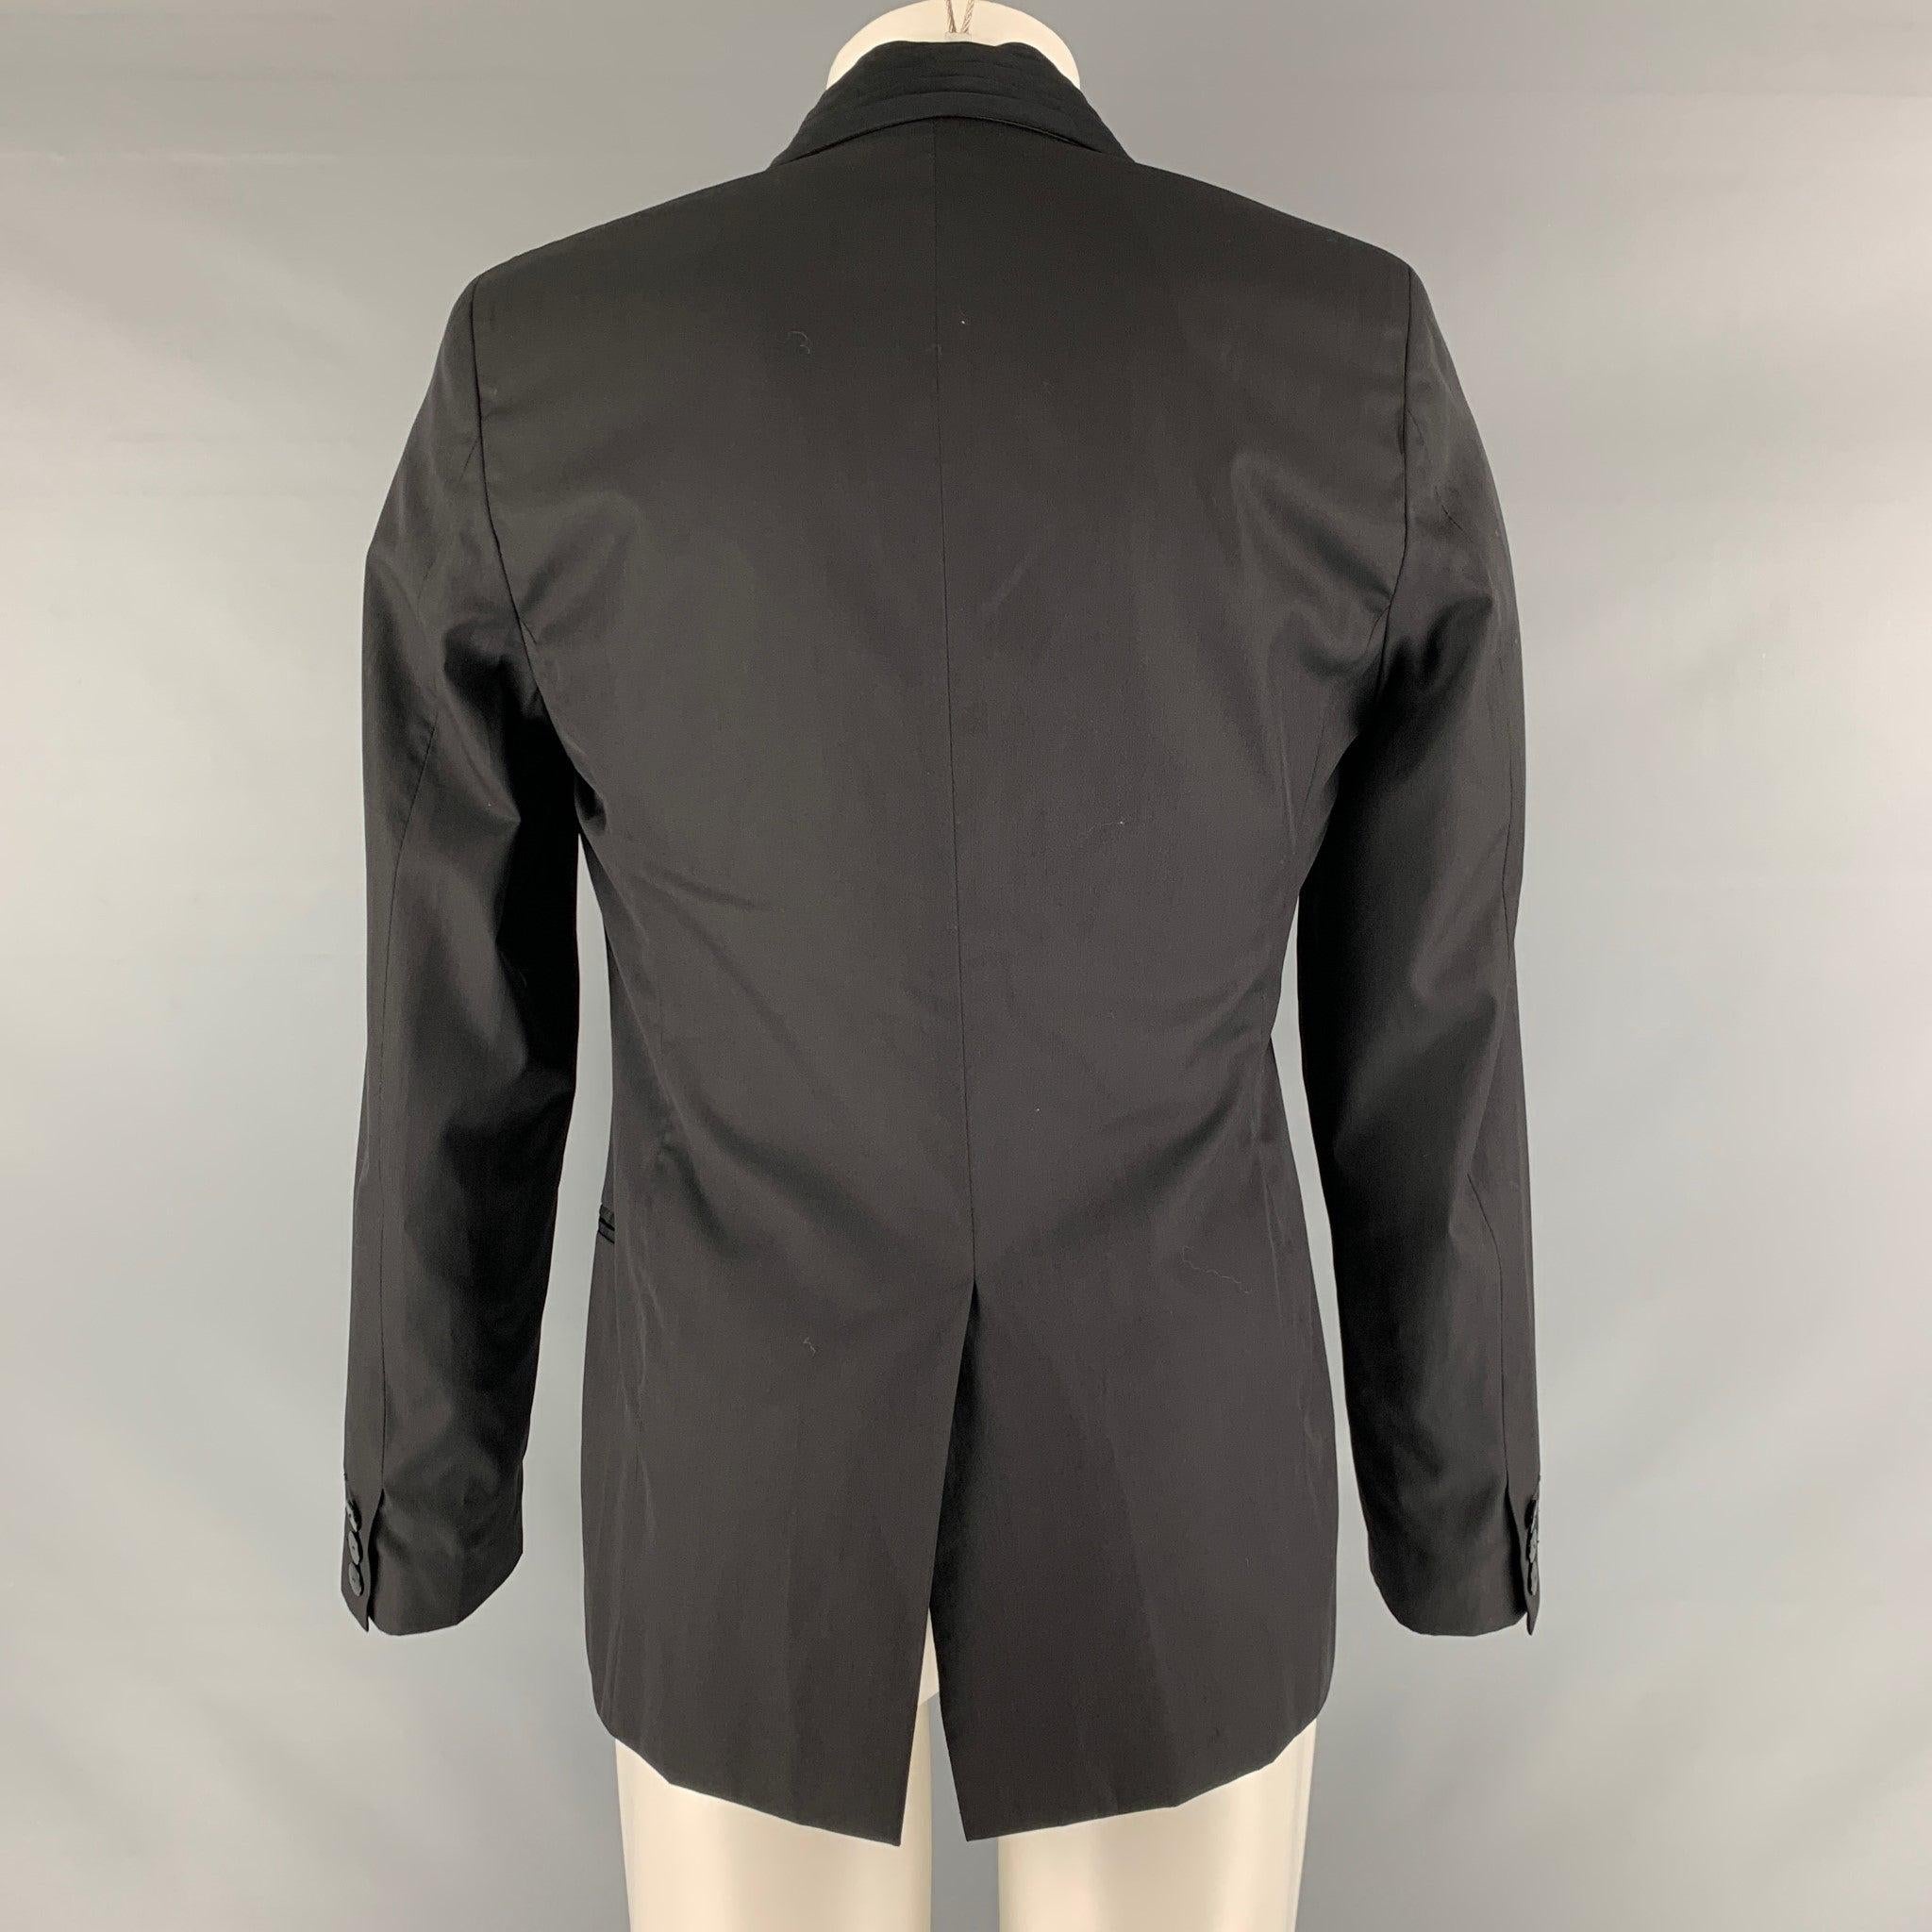 GAULTIER2 JEAN PAUL GAULTIER Size 38 Black Wool Silk Shawl Collar Sport Coat In Good Condition For Sale In San Francisco, CA